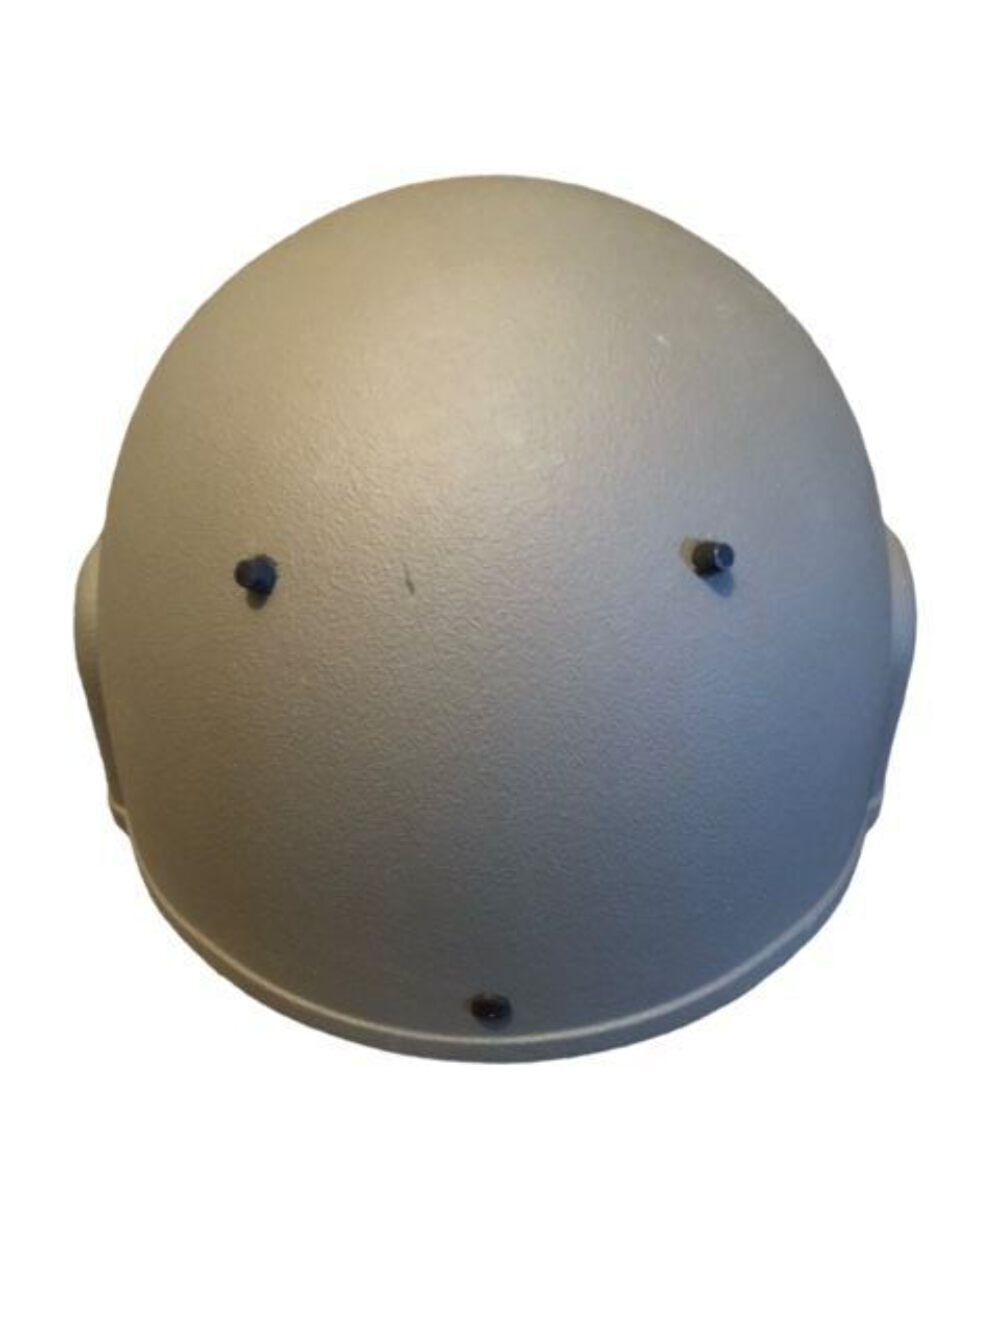 British Army MK 6 combat helmet 2006 with DPM helmet cover